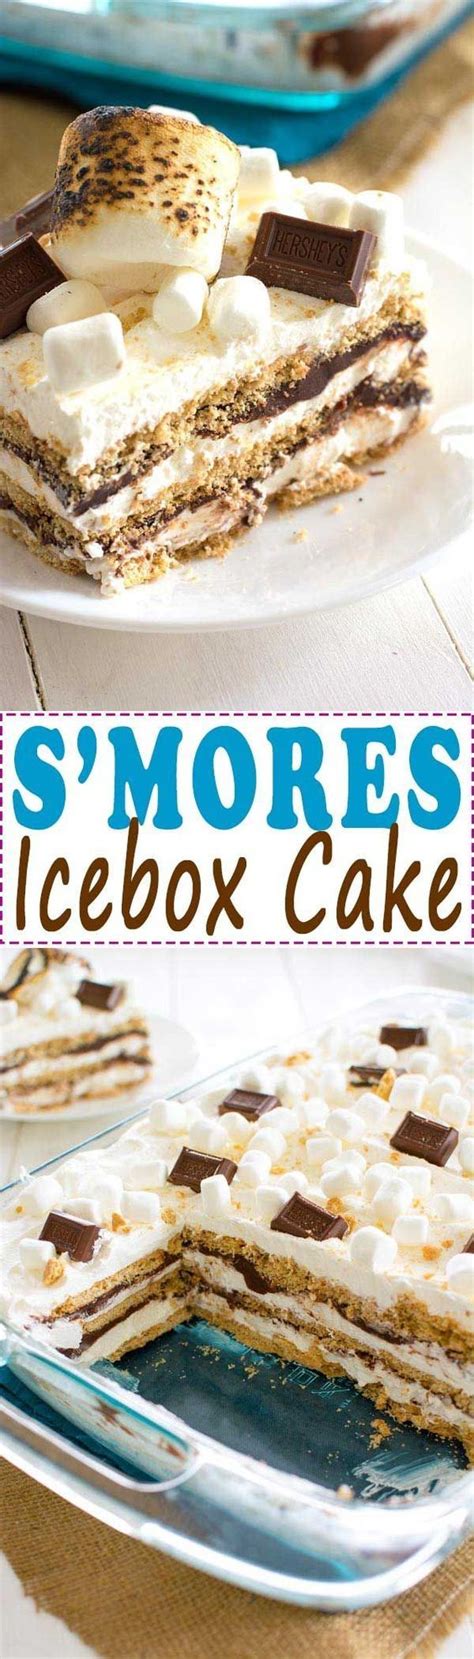 Smores Icebox Cake Dessert Recipes Easy Cold Desserts Icebox Cake